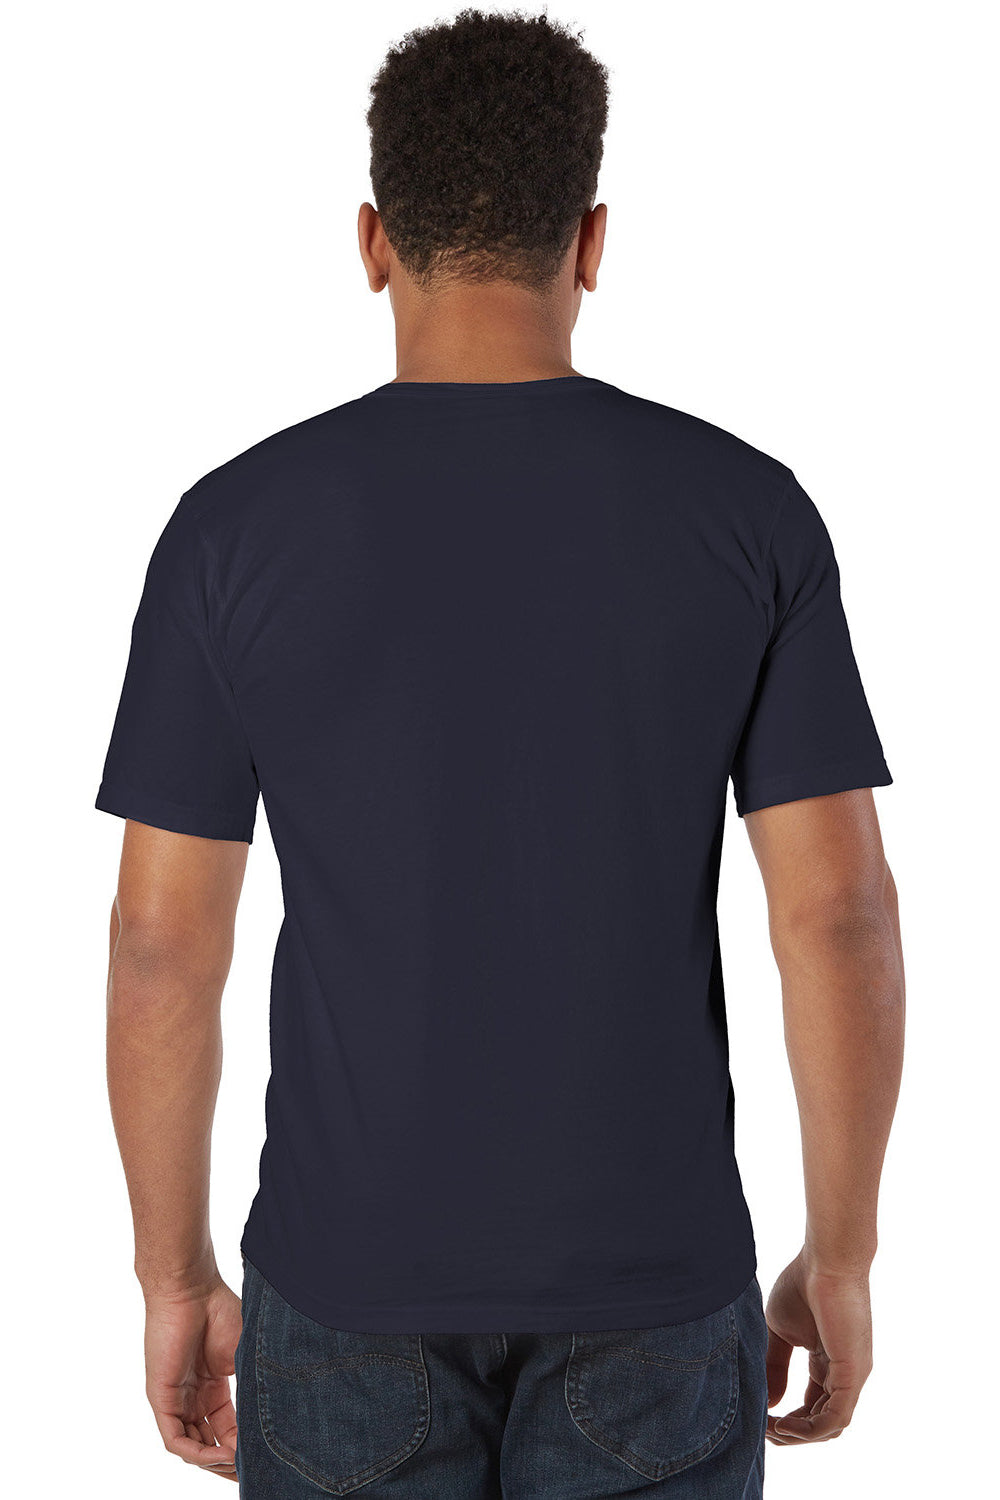 Champion CD100 Mens Garment Dyed Short Sleeve Crewneck T-Shirt Navy Blue Model Back